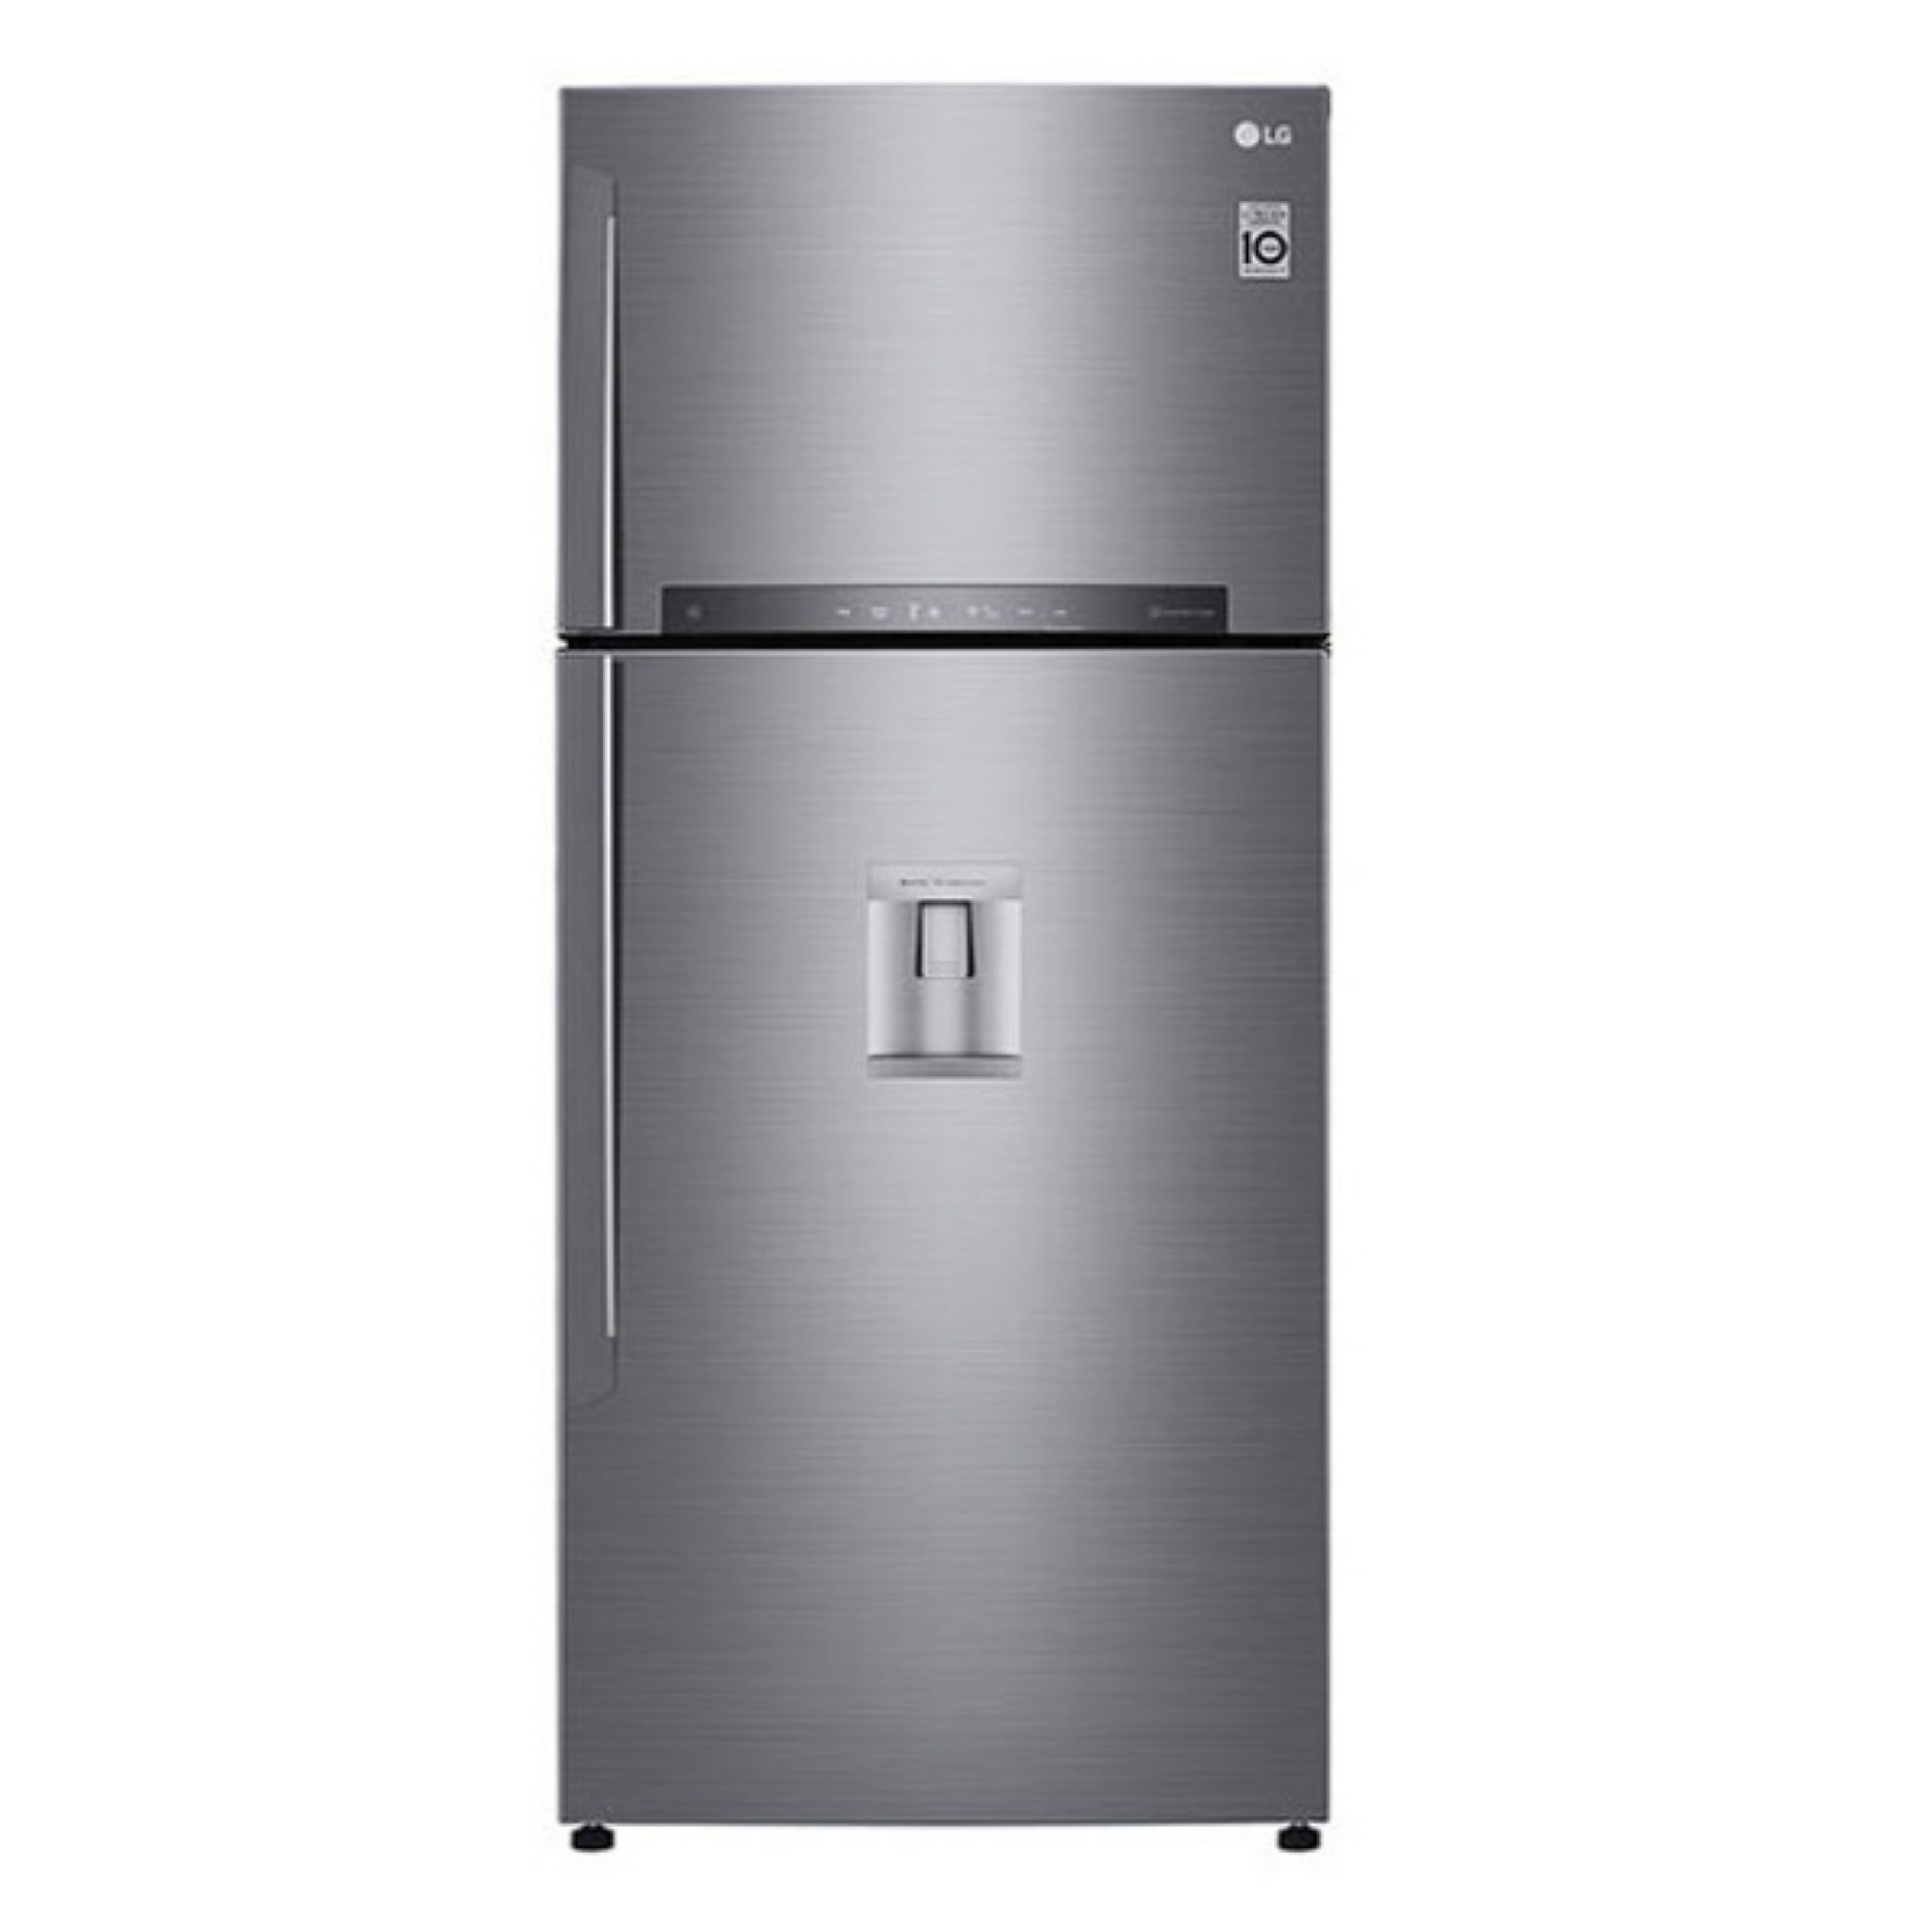 LG GN-C422SGCU Refrigerator, Top Mount Freezer, 393L – Black